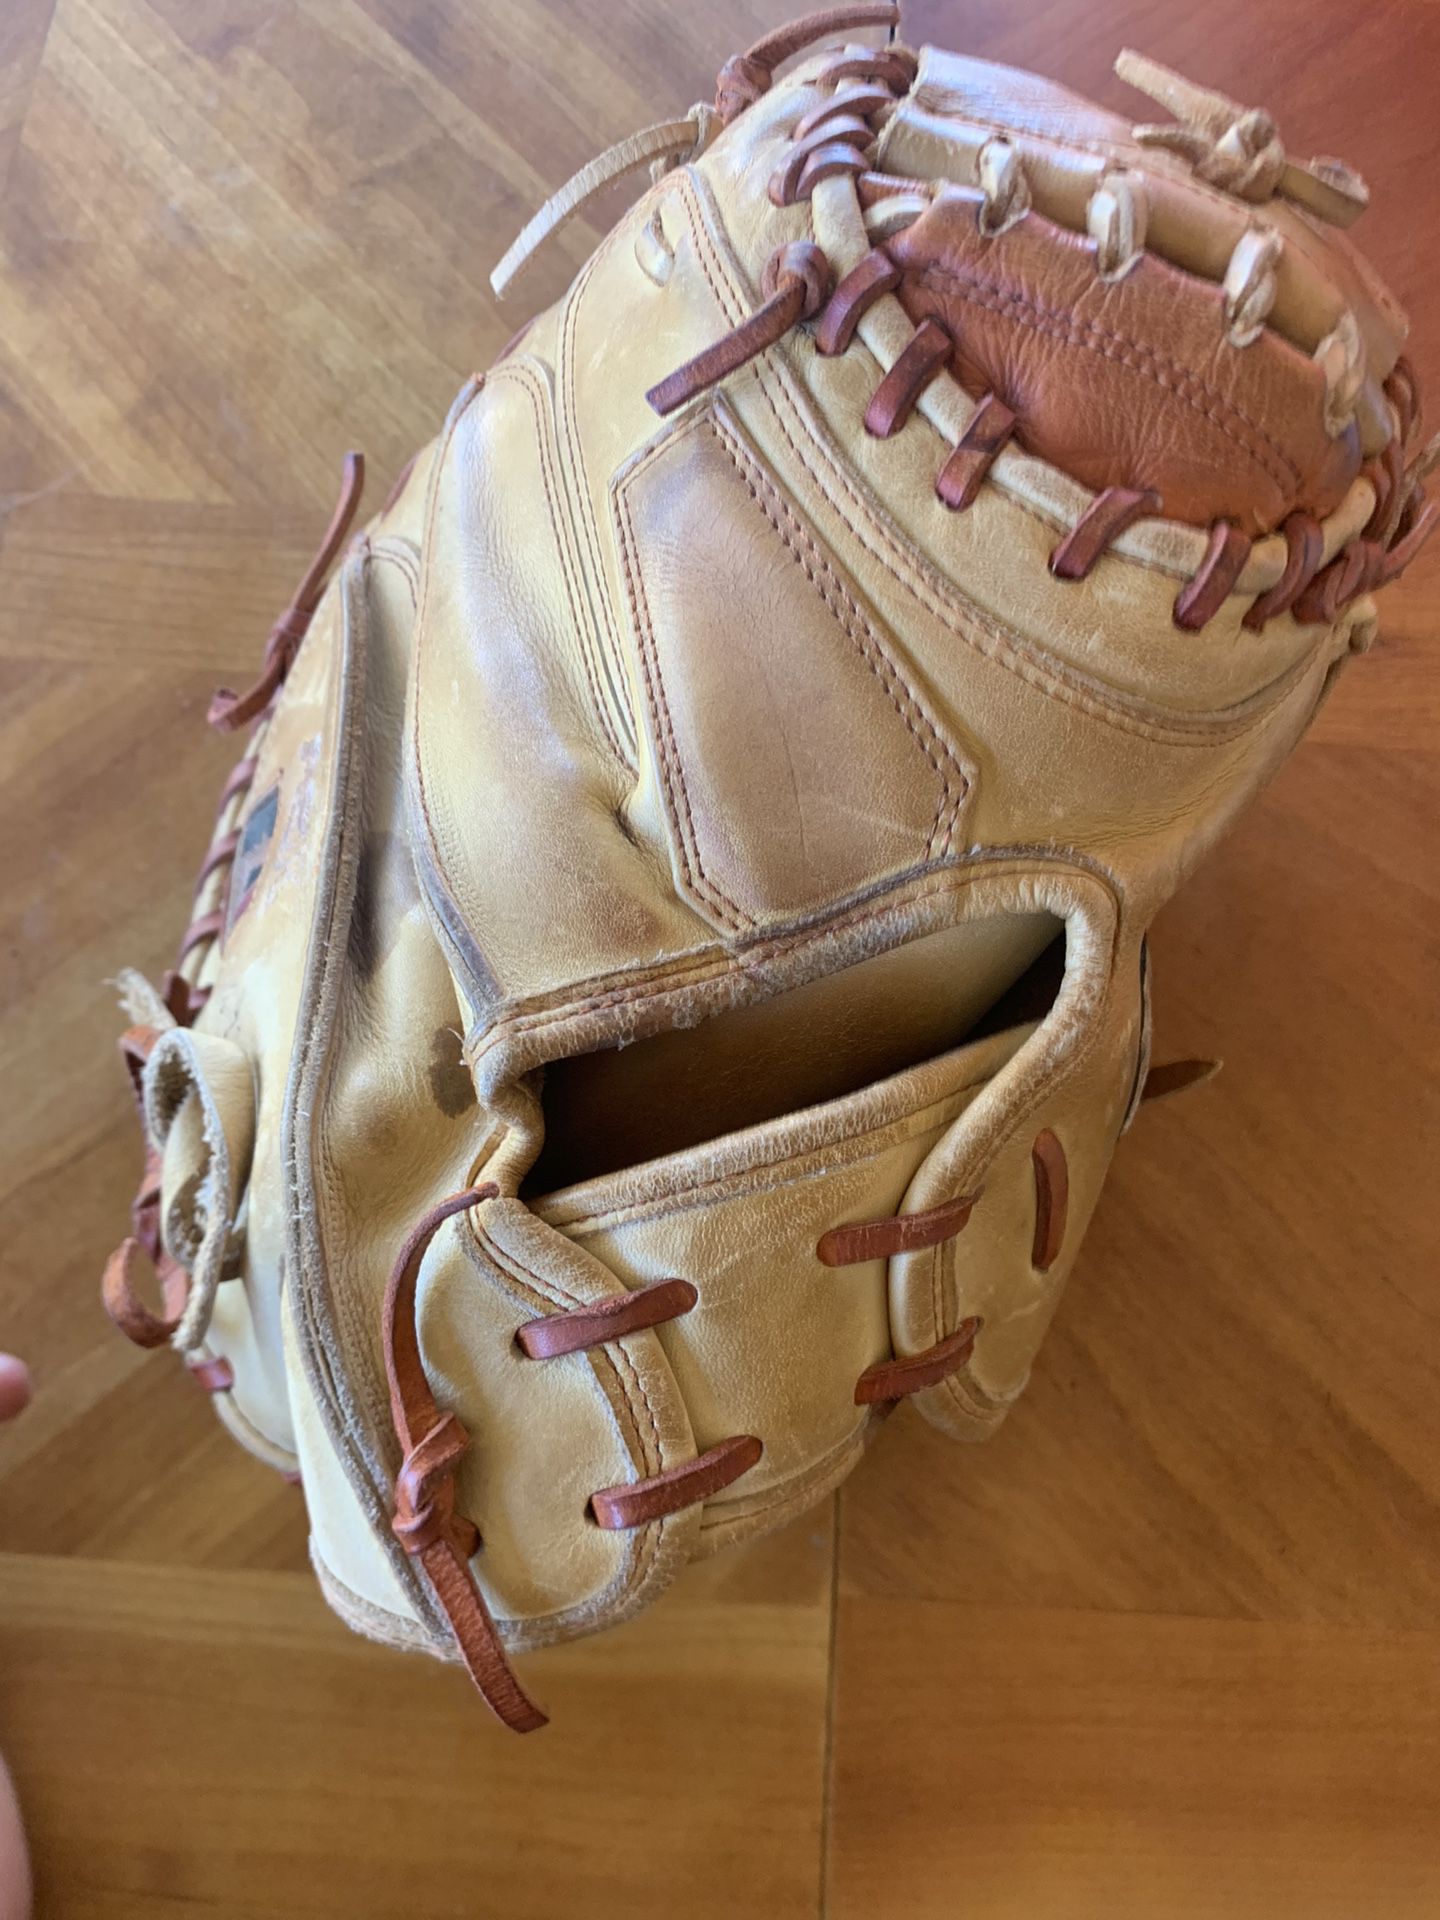 Wilson A2k Catchers Glove